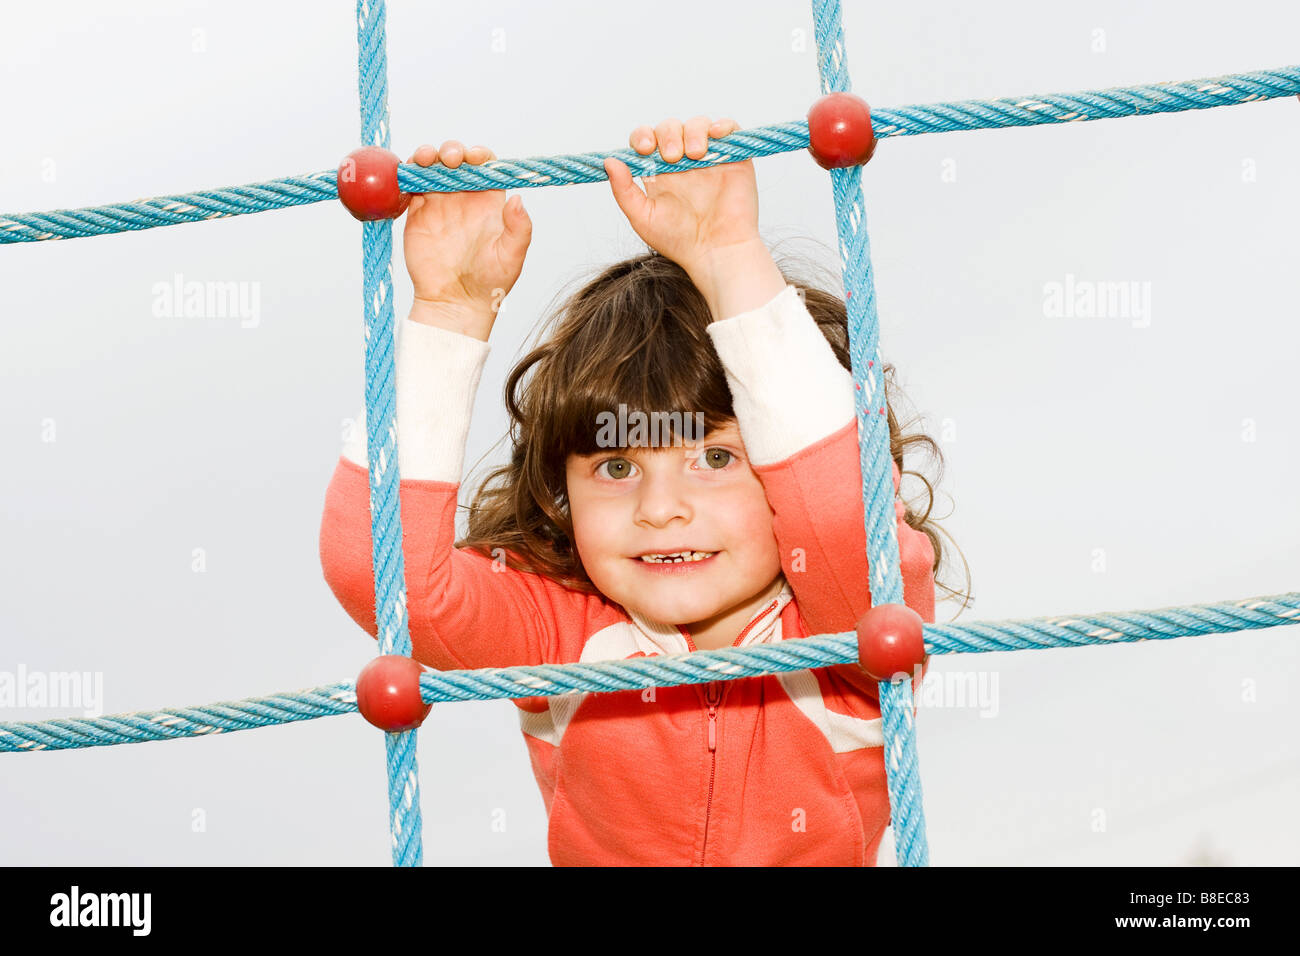 Little girl 3 years old climbing on net Stock Photo